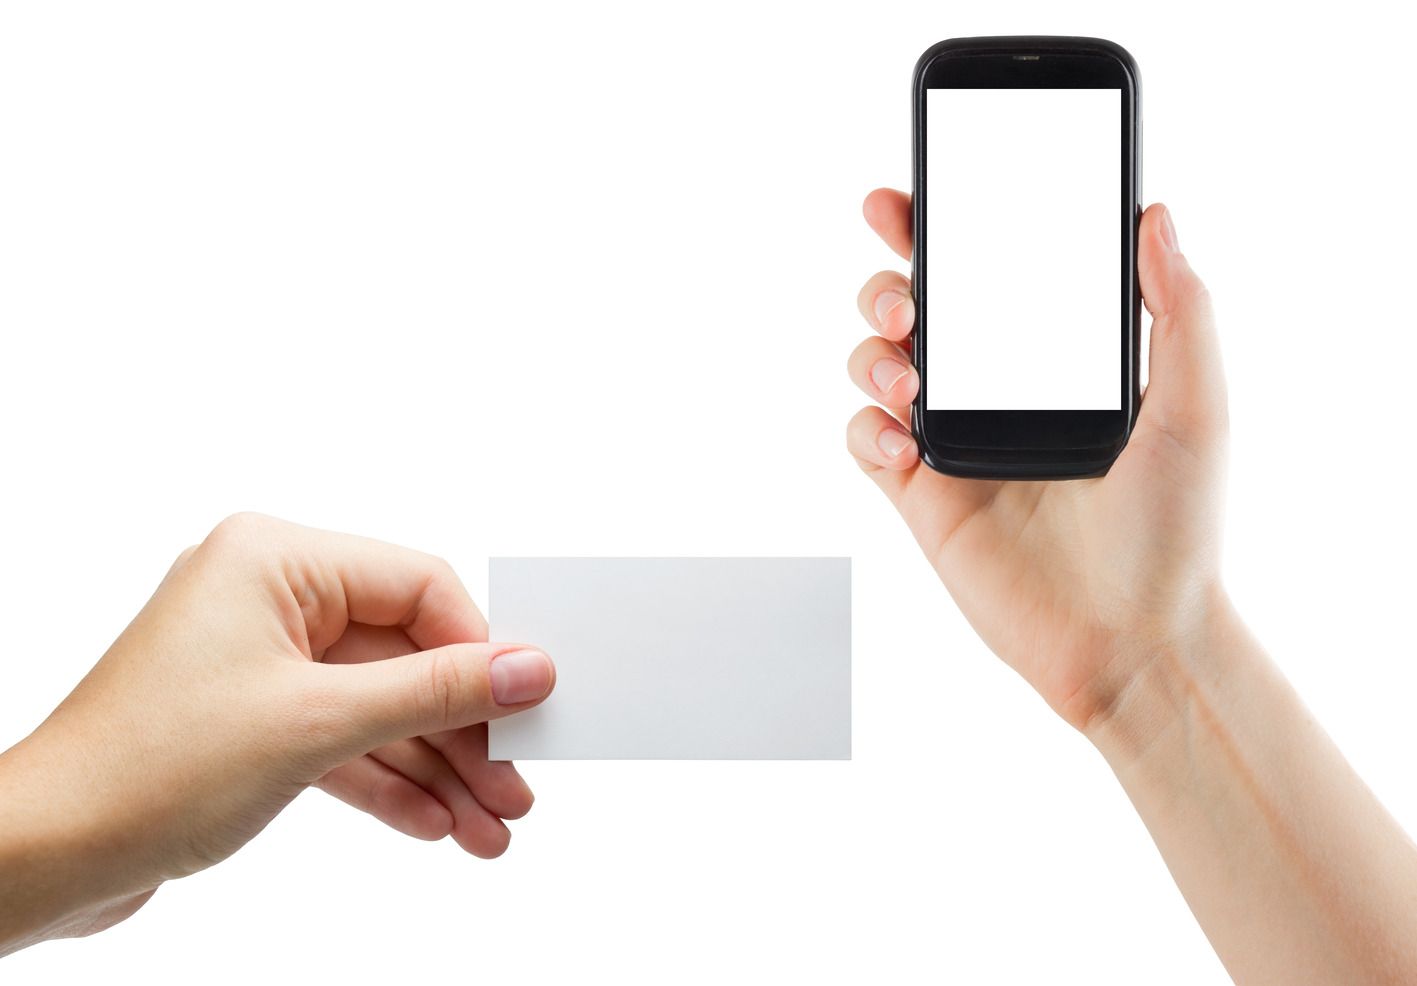  5 benefits of NFC technology